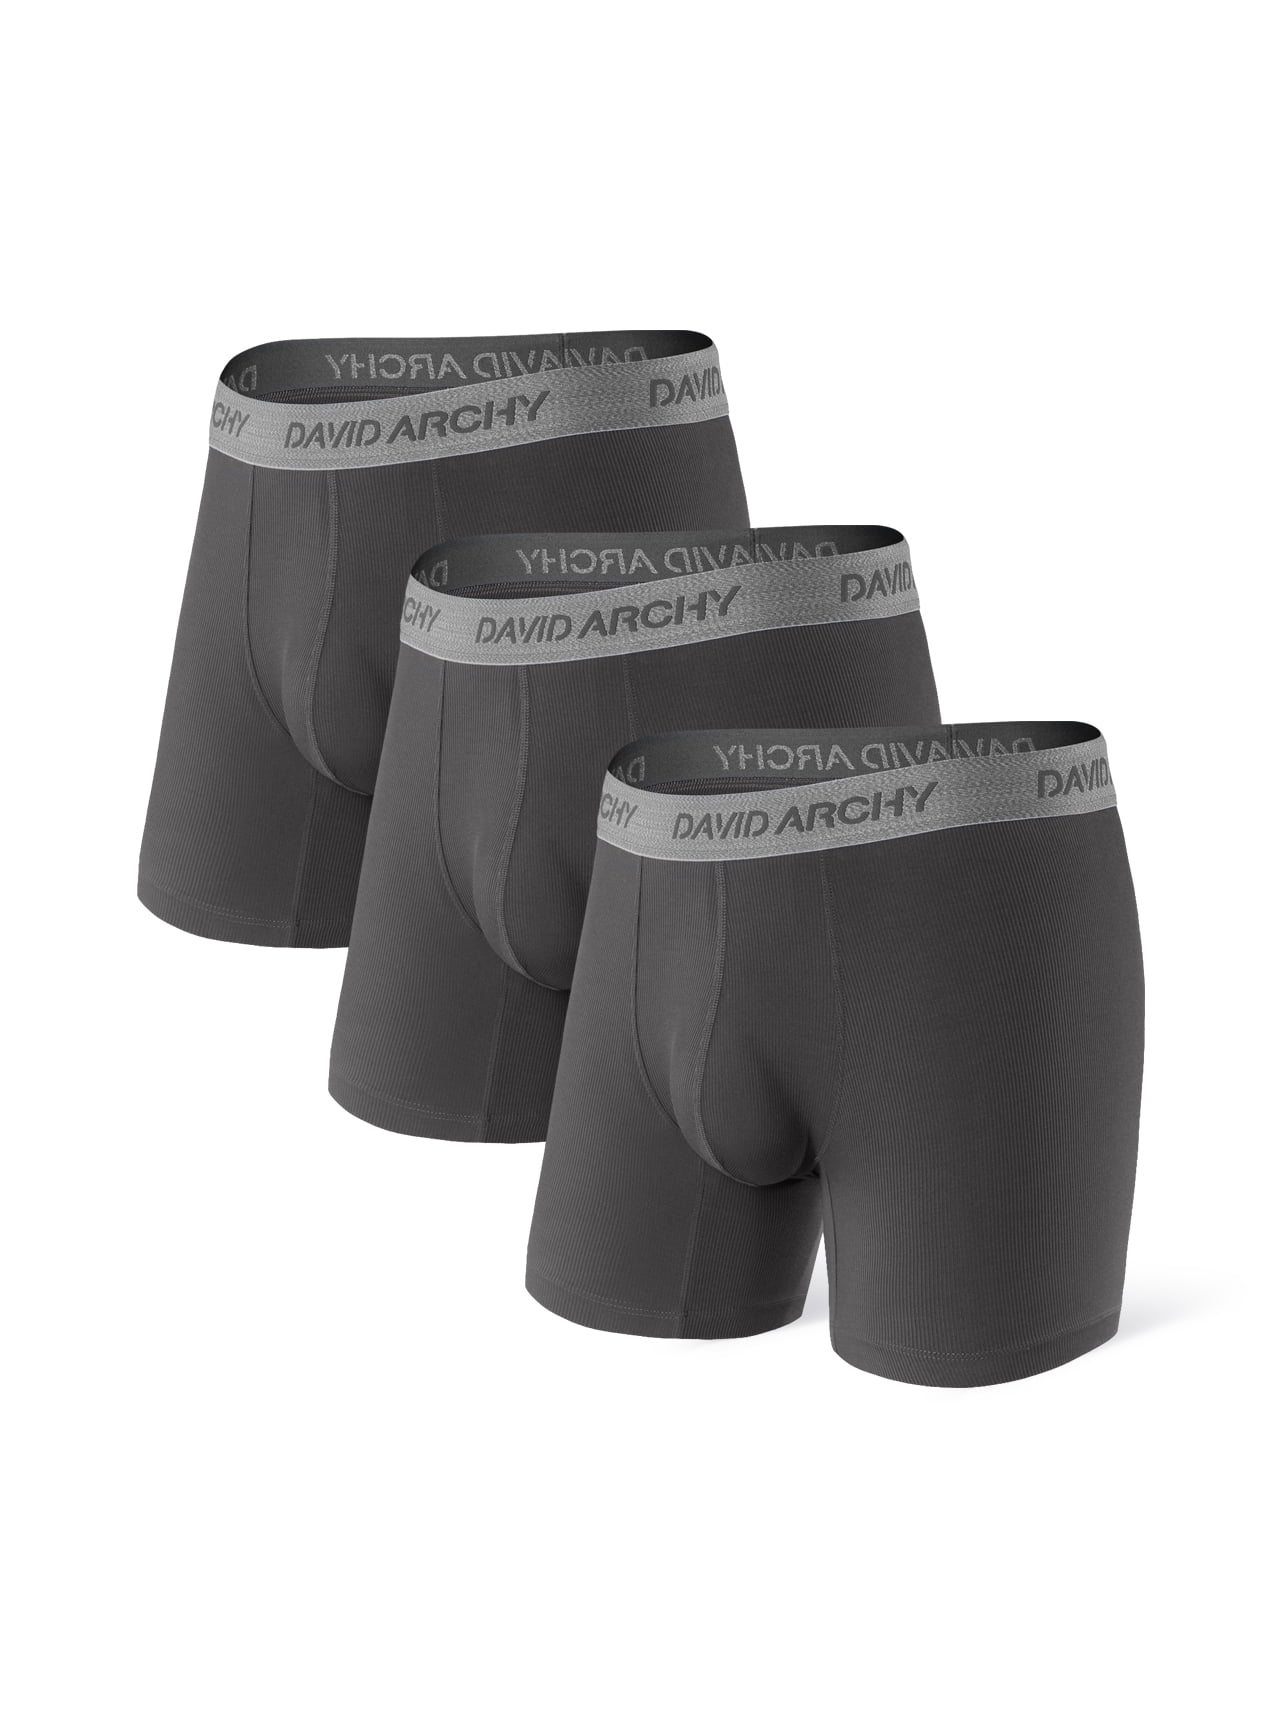 David Archy Adult Mens Underwear Ultra Soft Micro Modal Boxer Briefs